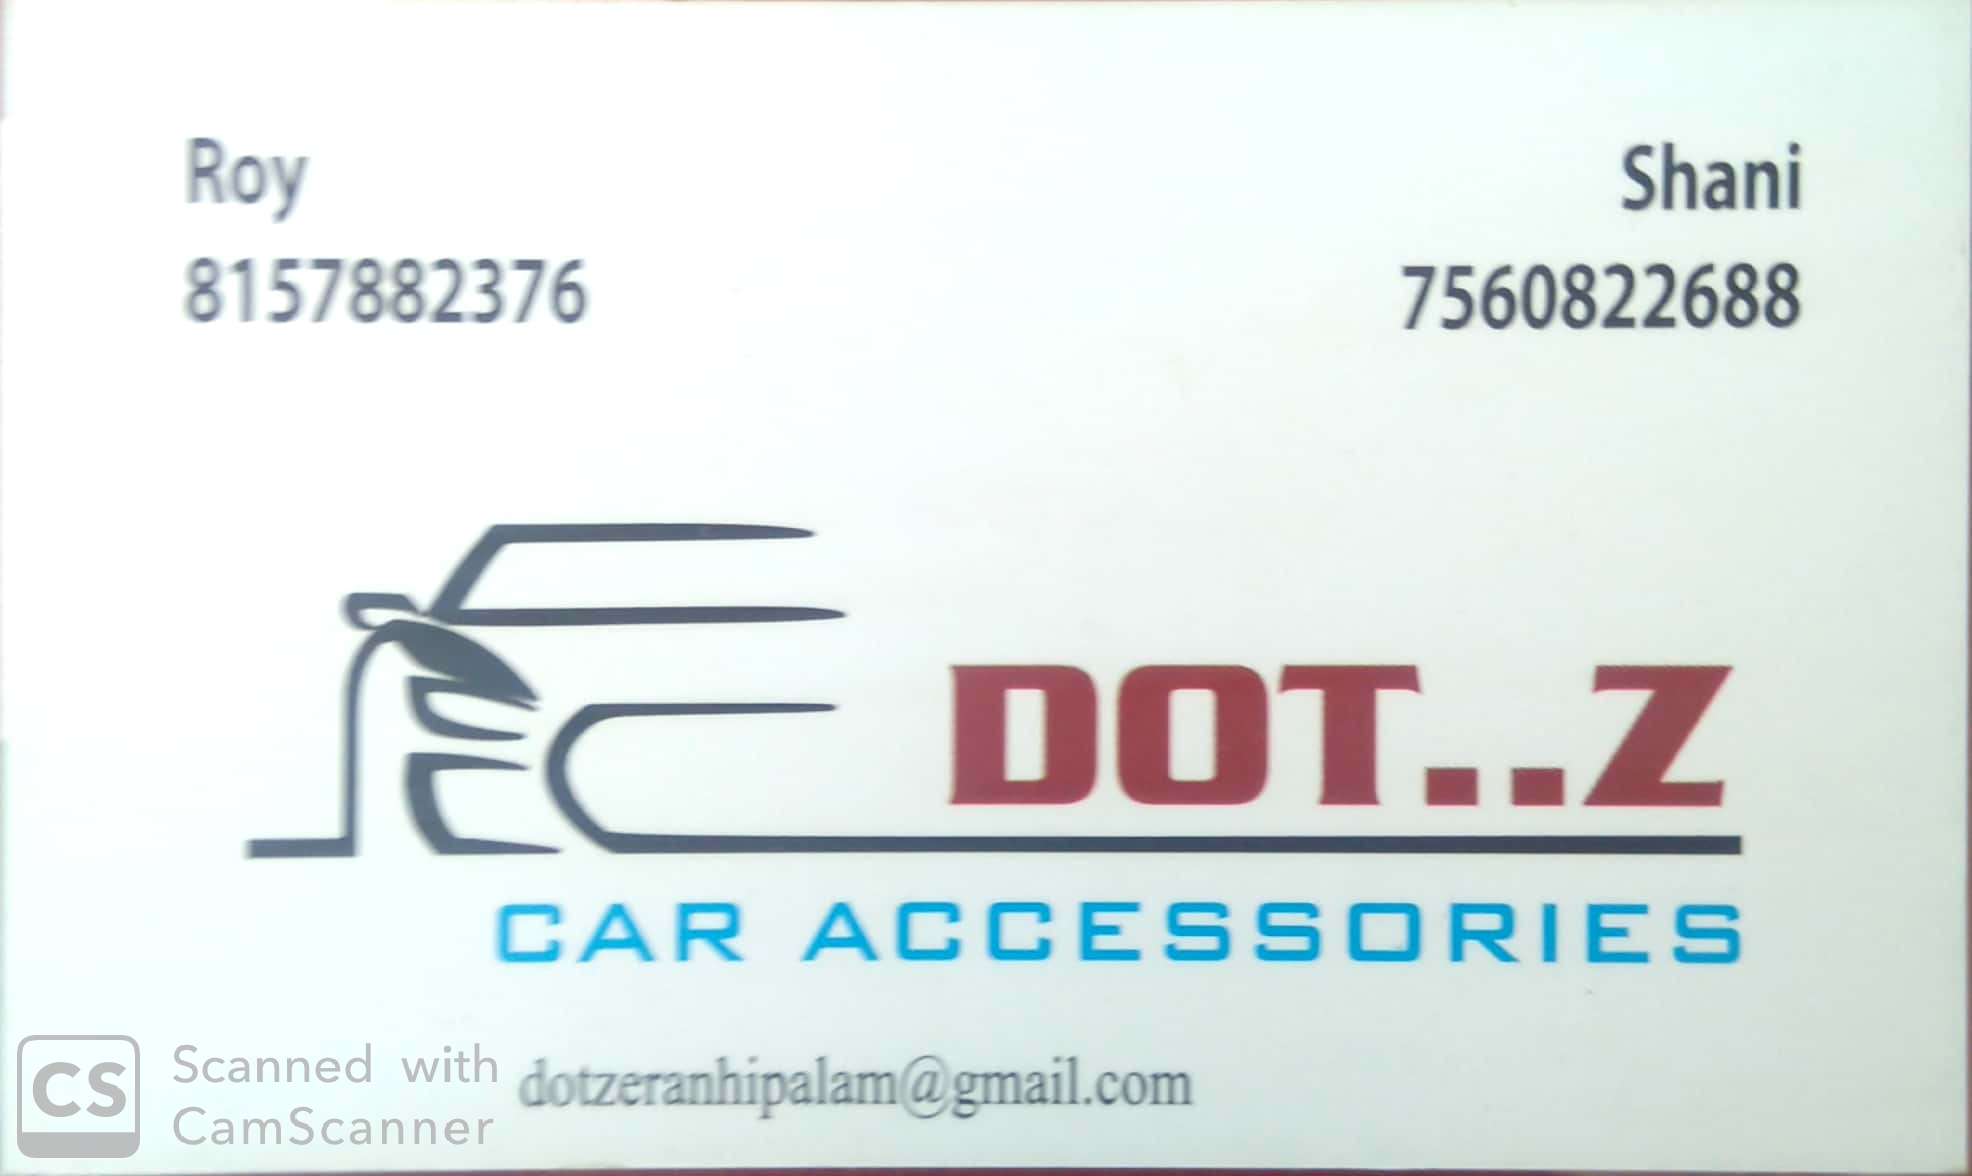 DOT.. z, ACCESSORIES,  service in Eranhipalam, Kozhikode